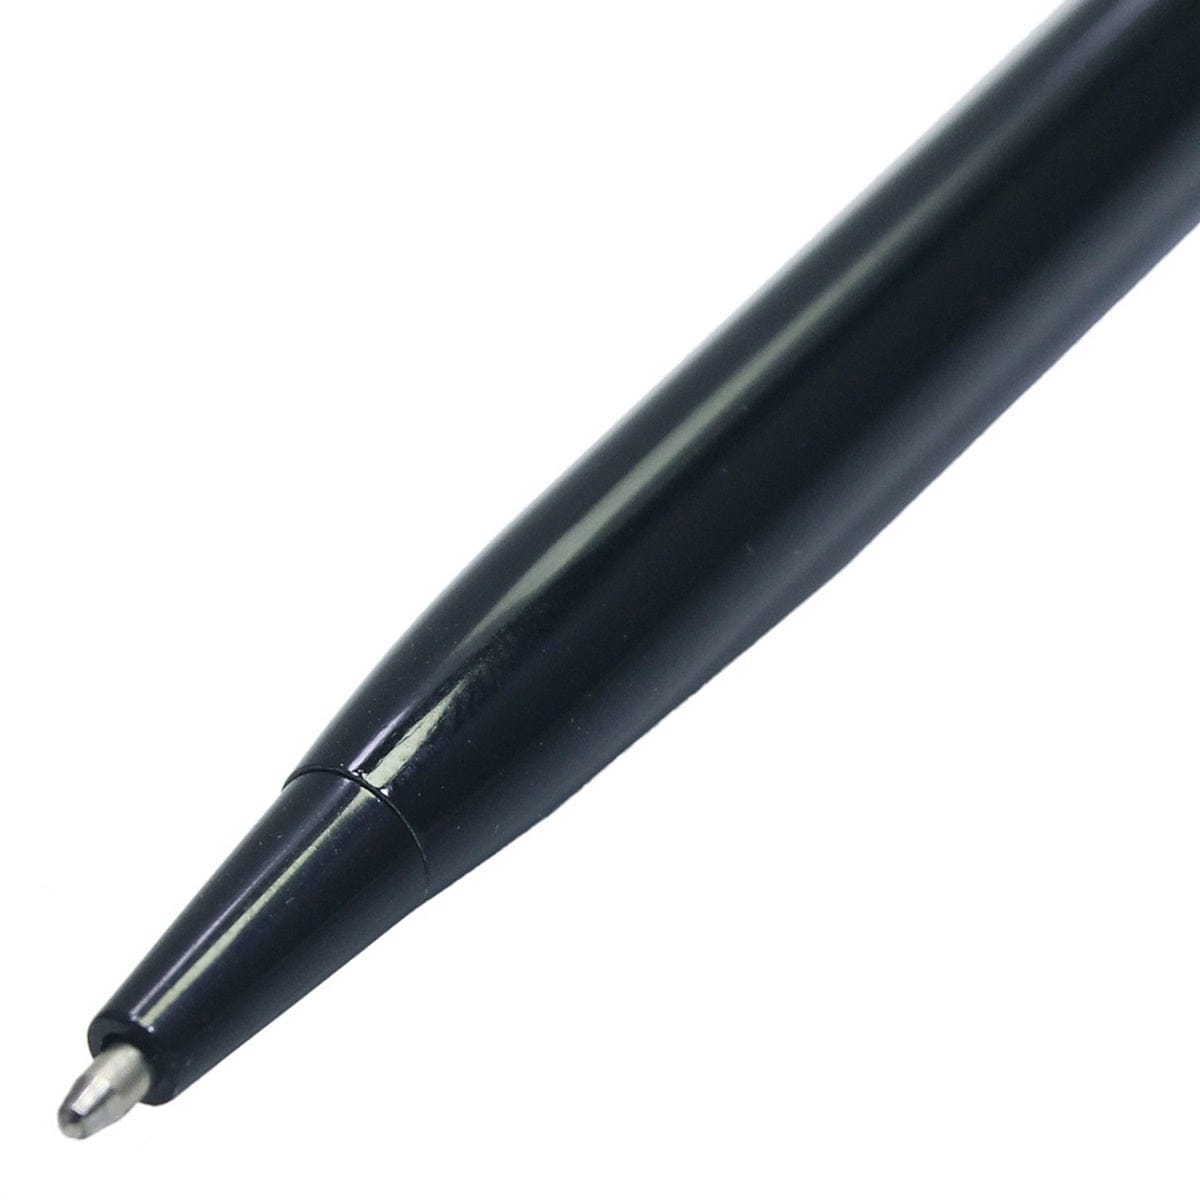 jags-mumbai Ball Pens Ball Pen Z109-021QT-2 BLACK